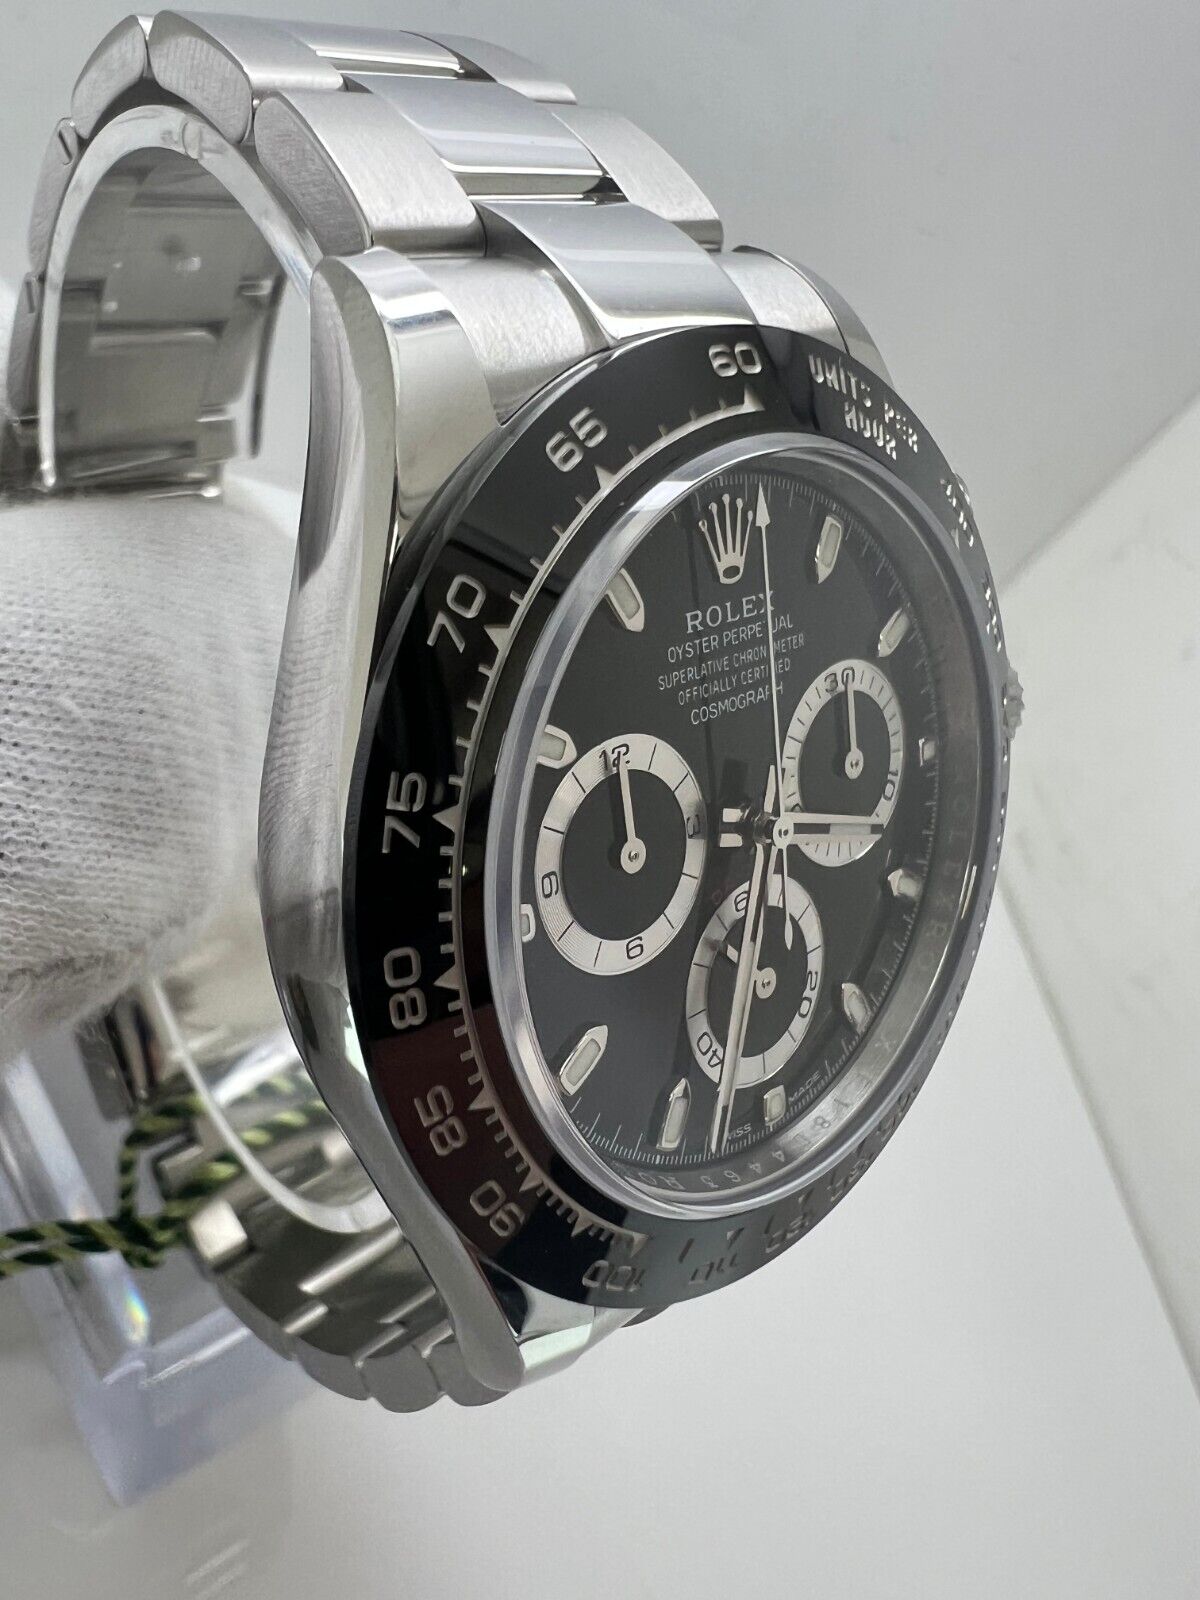 Rolex Cosmograph Daytona Men's Black Watch - 116500LN